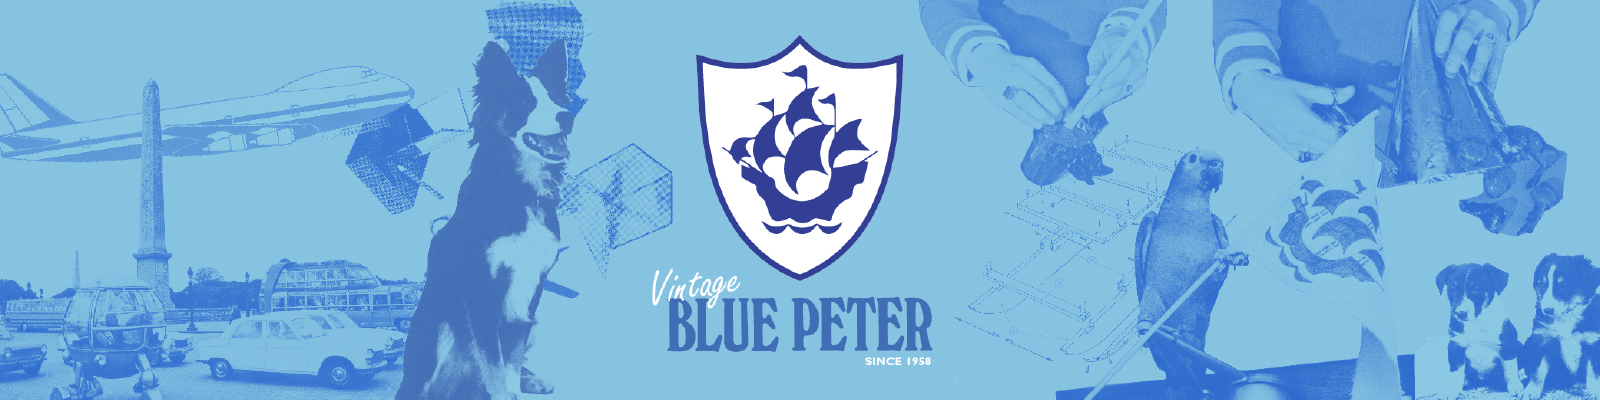 Blue Peter Vintage